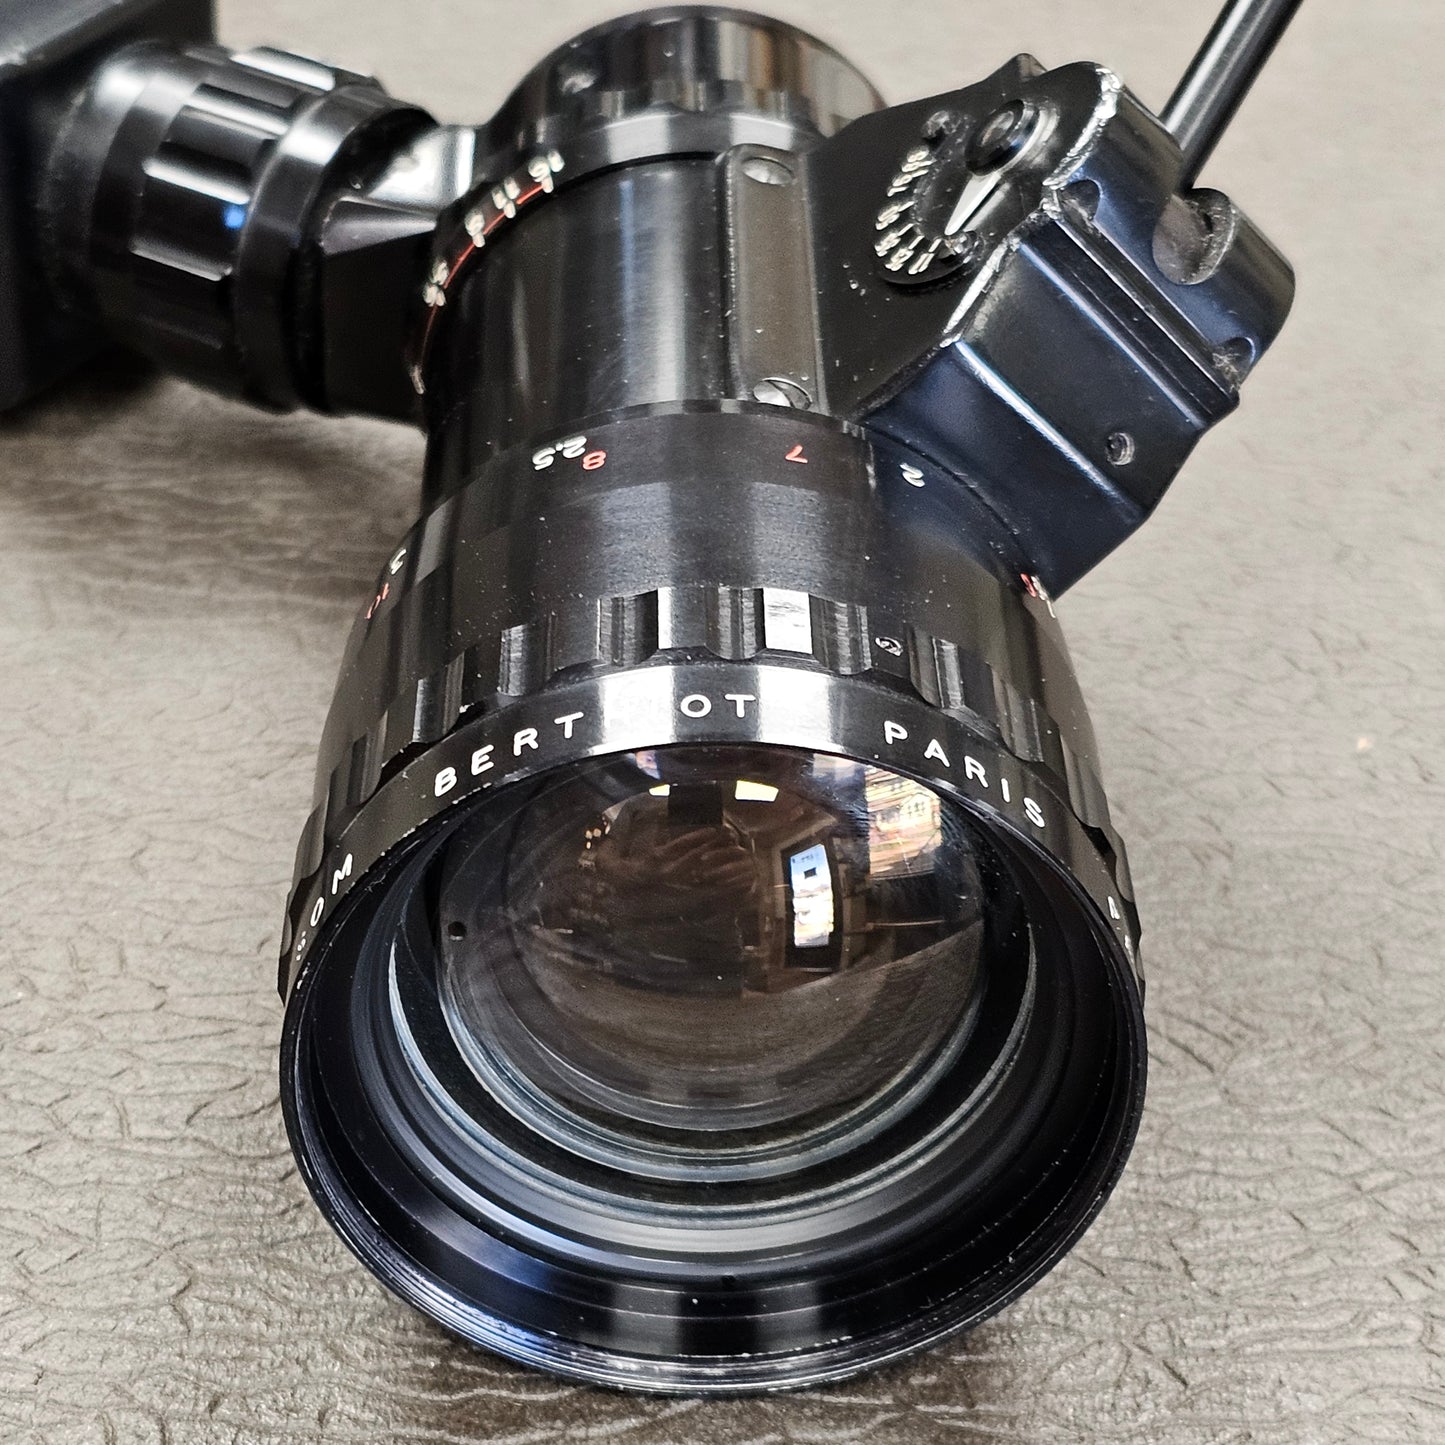 Som Berthiot Pan Cinor 17-85mm T2.66 C-Mount Zoom lens with Dogleg Viewfinder S# CC 7369